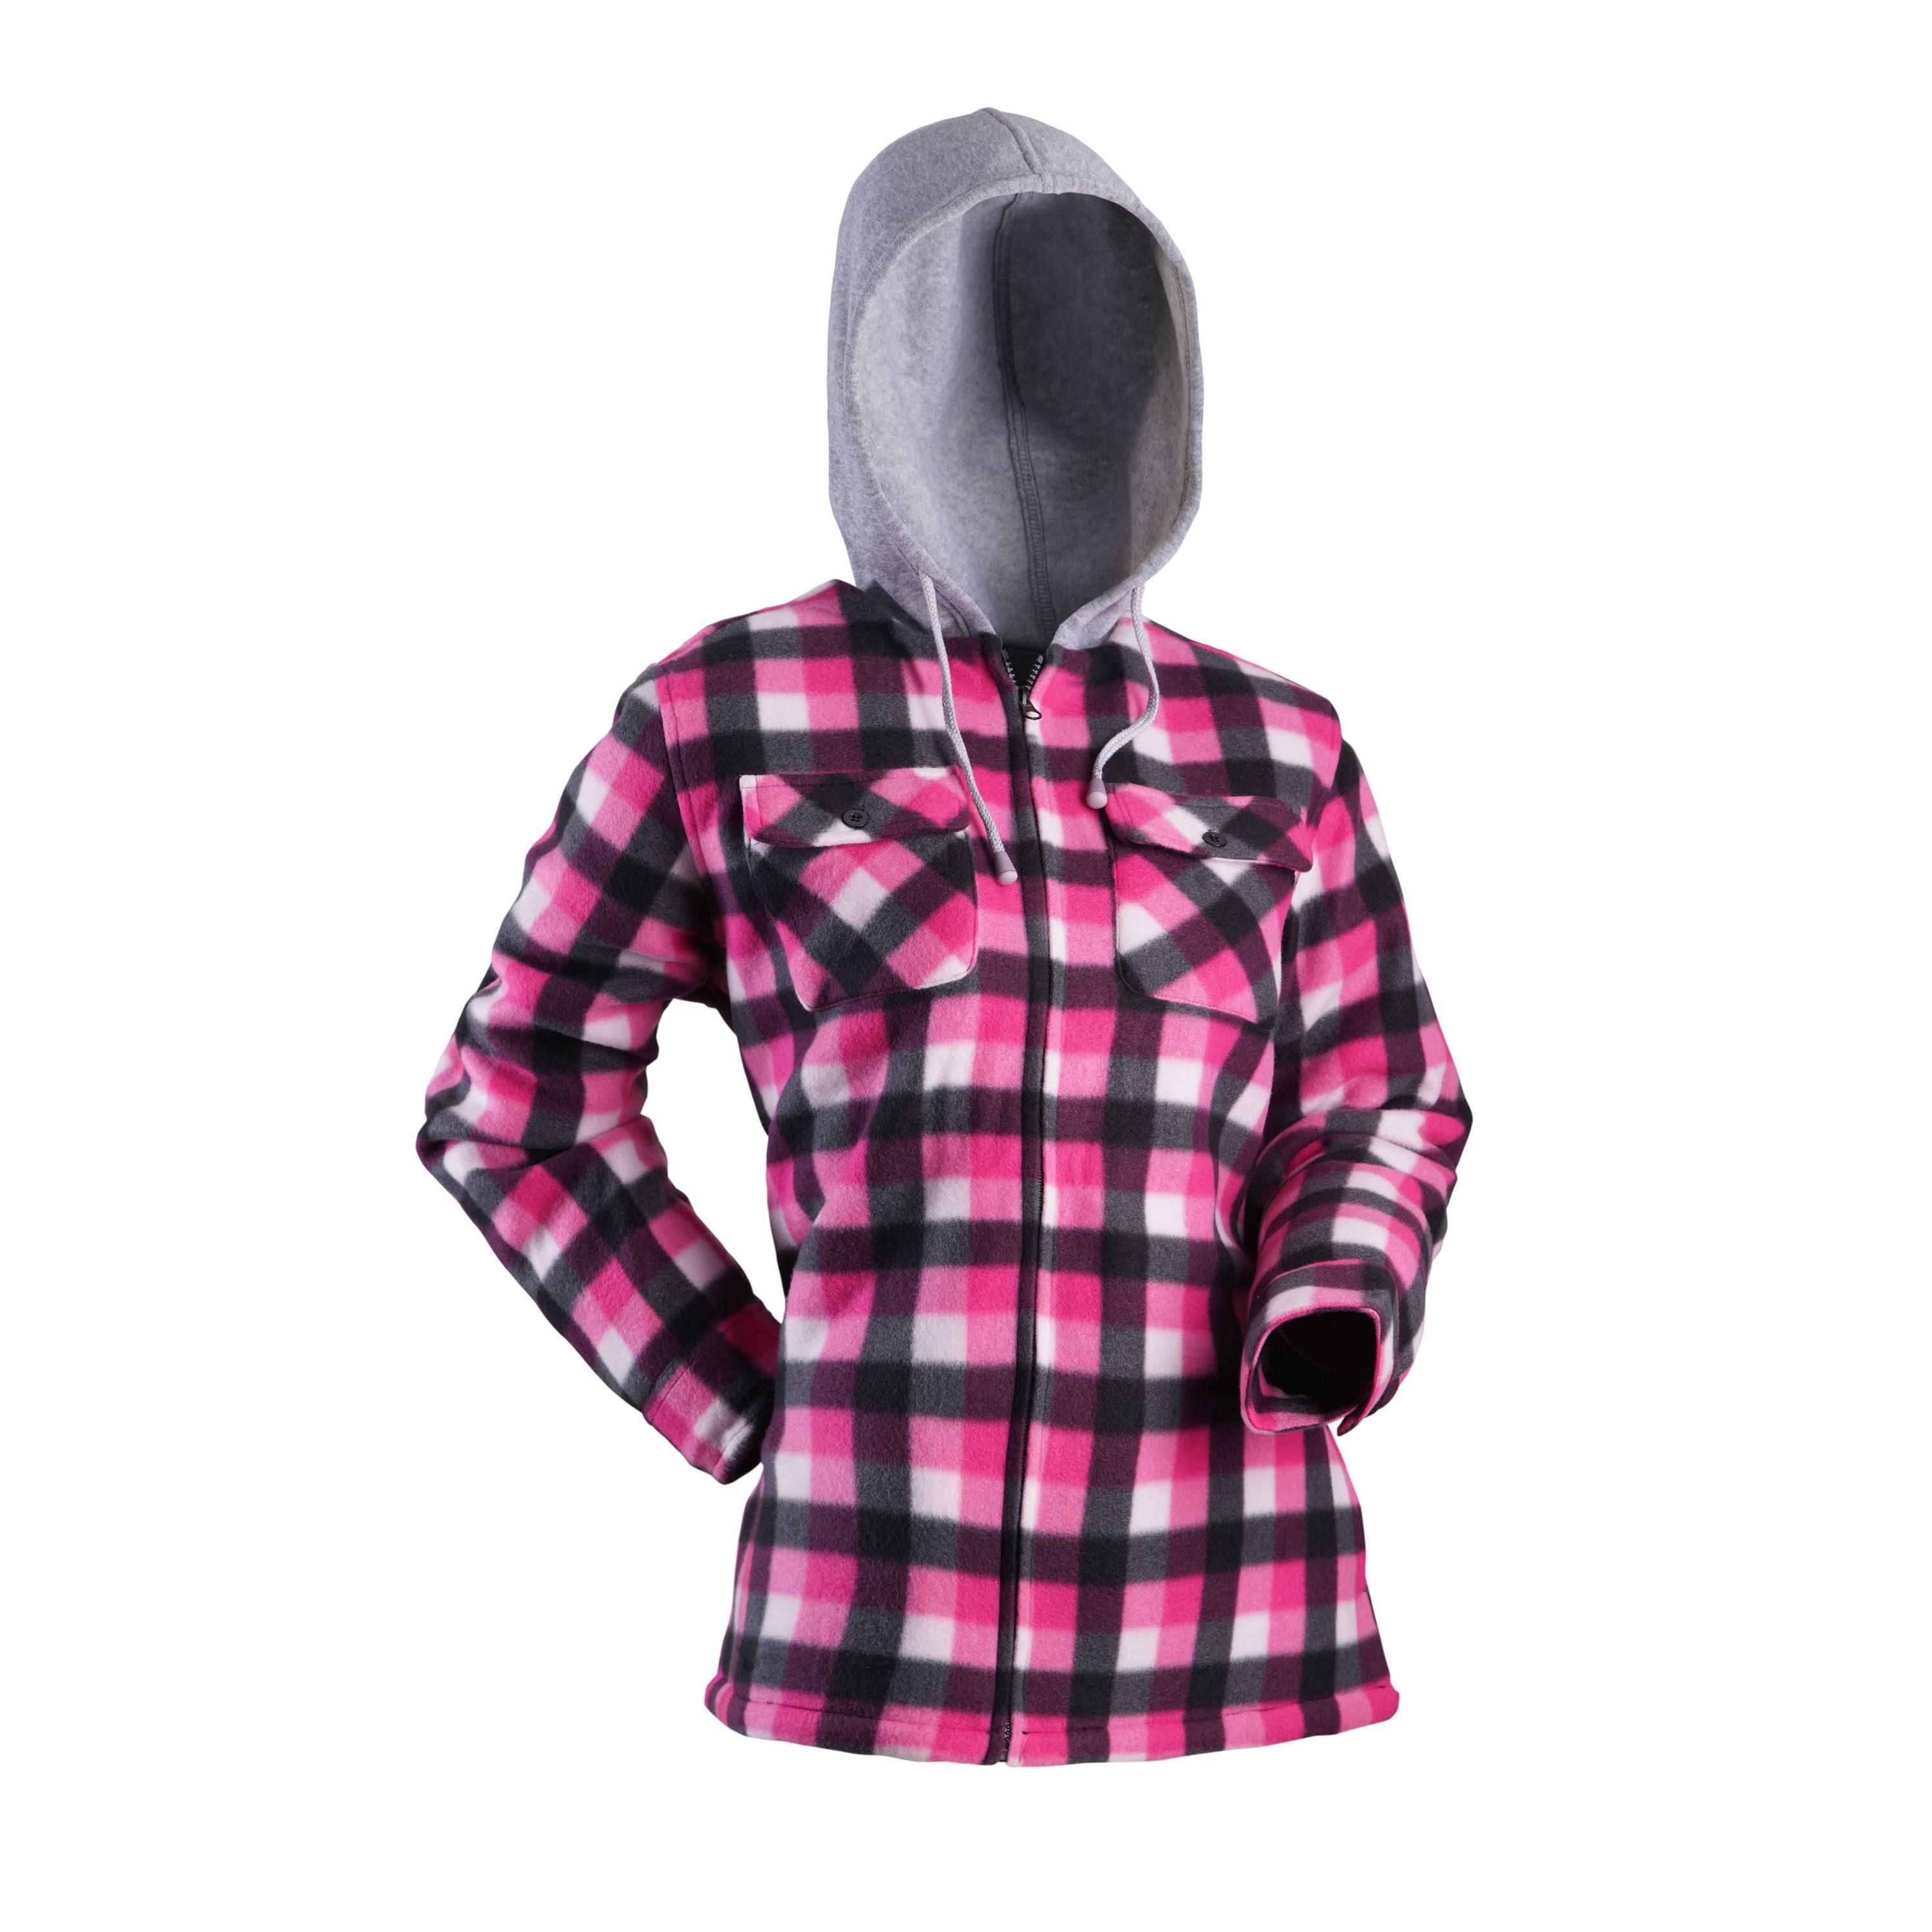 Chemise de polar à capuchon "Countryside" - Femme||"Countryside" Hooded polar jacket - Women's